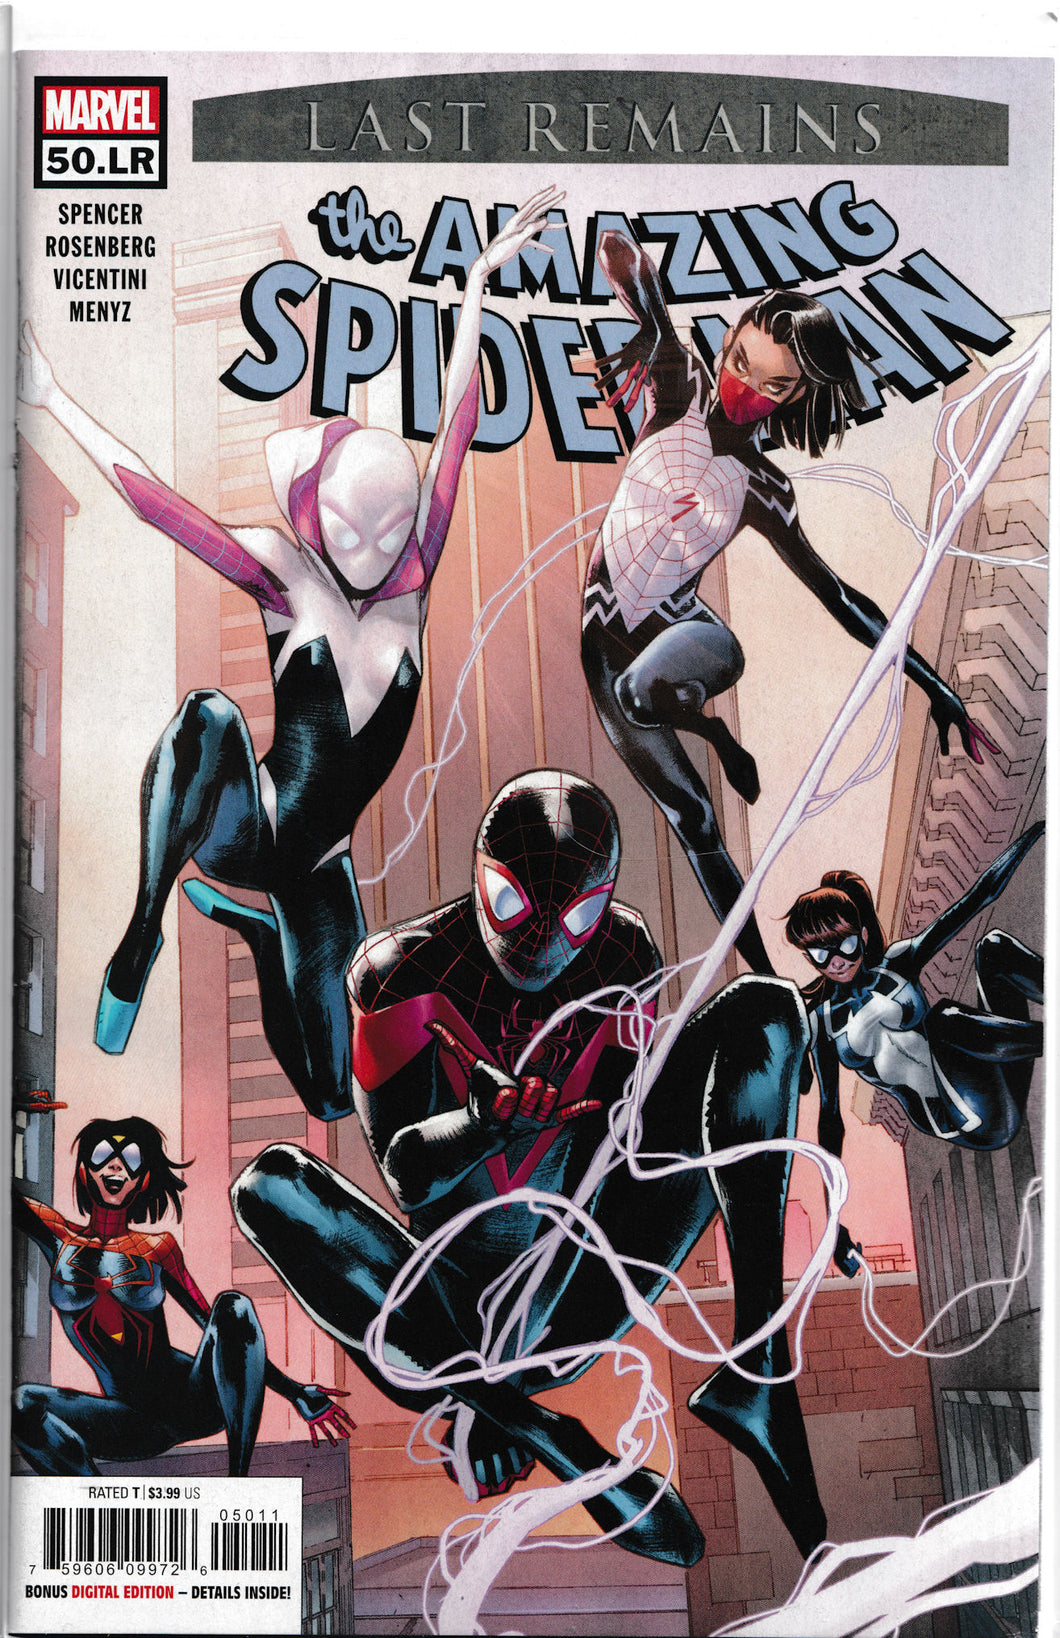 THE AMAZING SPIDER-MAN #50 LR (Last Remains Variant) ~ Marvel Comics